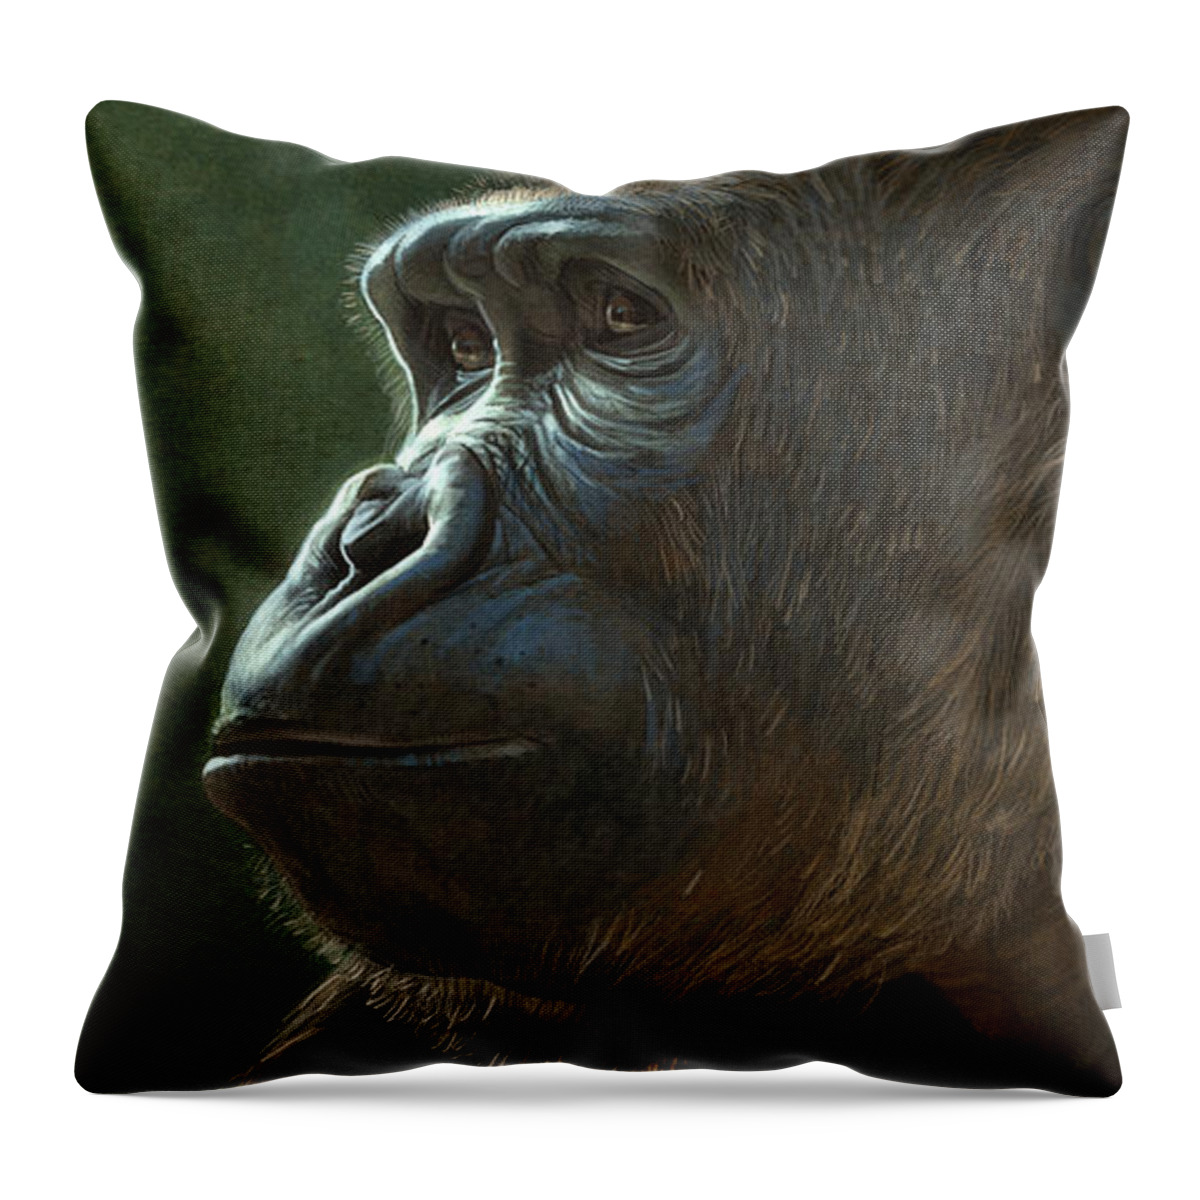 Gorilla Throw Pillow featuring the digital art Gorilla by Aaron Blaise